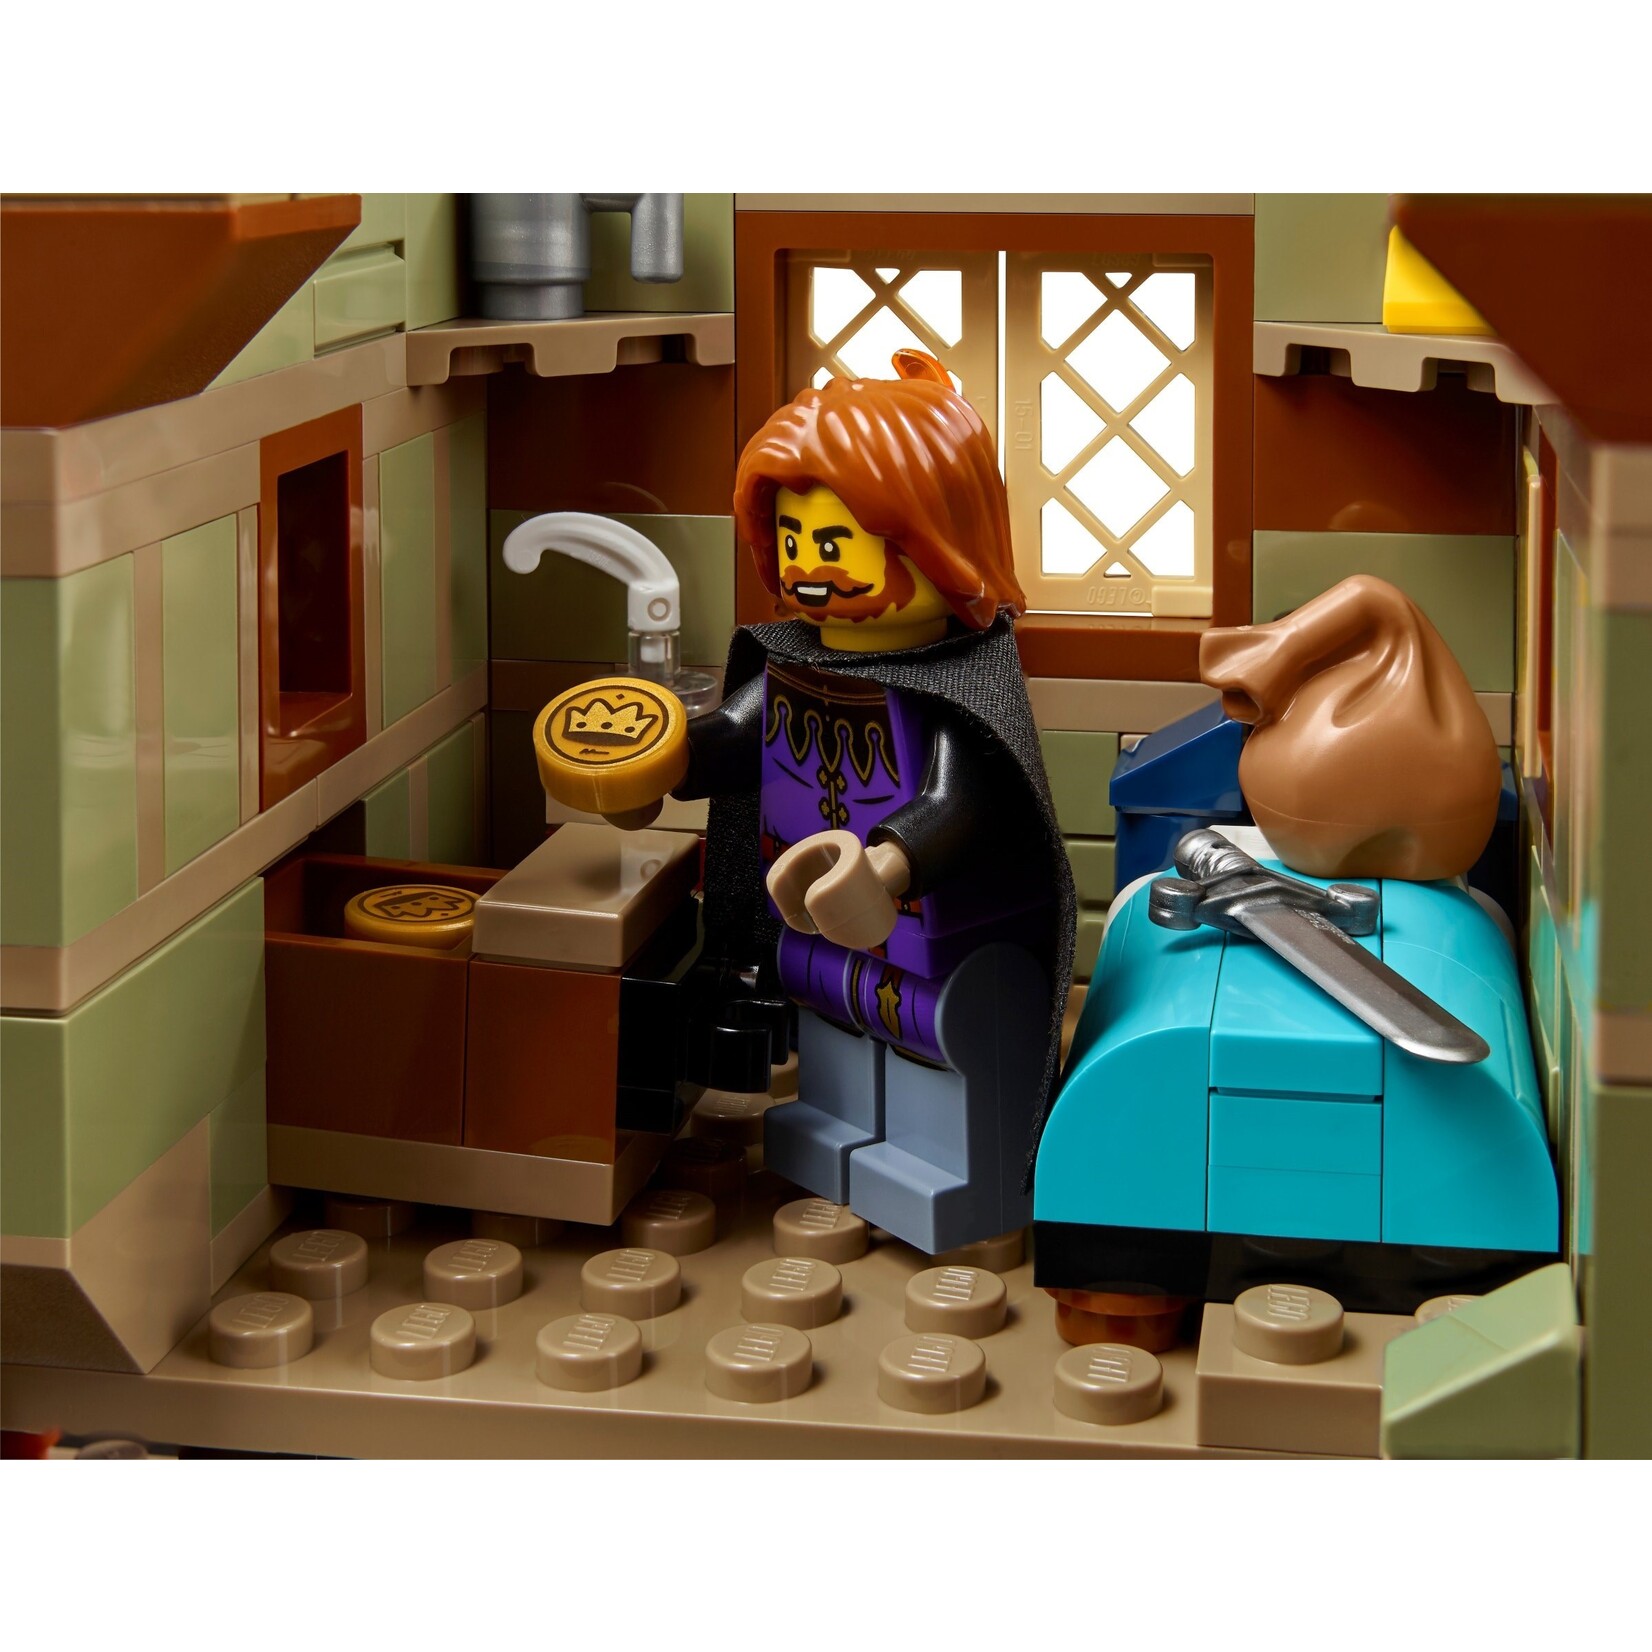 LEGO Middeleeuws stadsplein - 10332